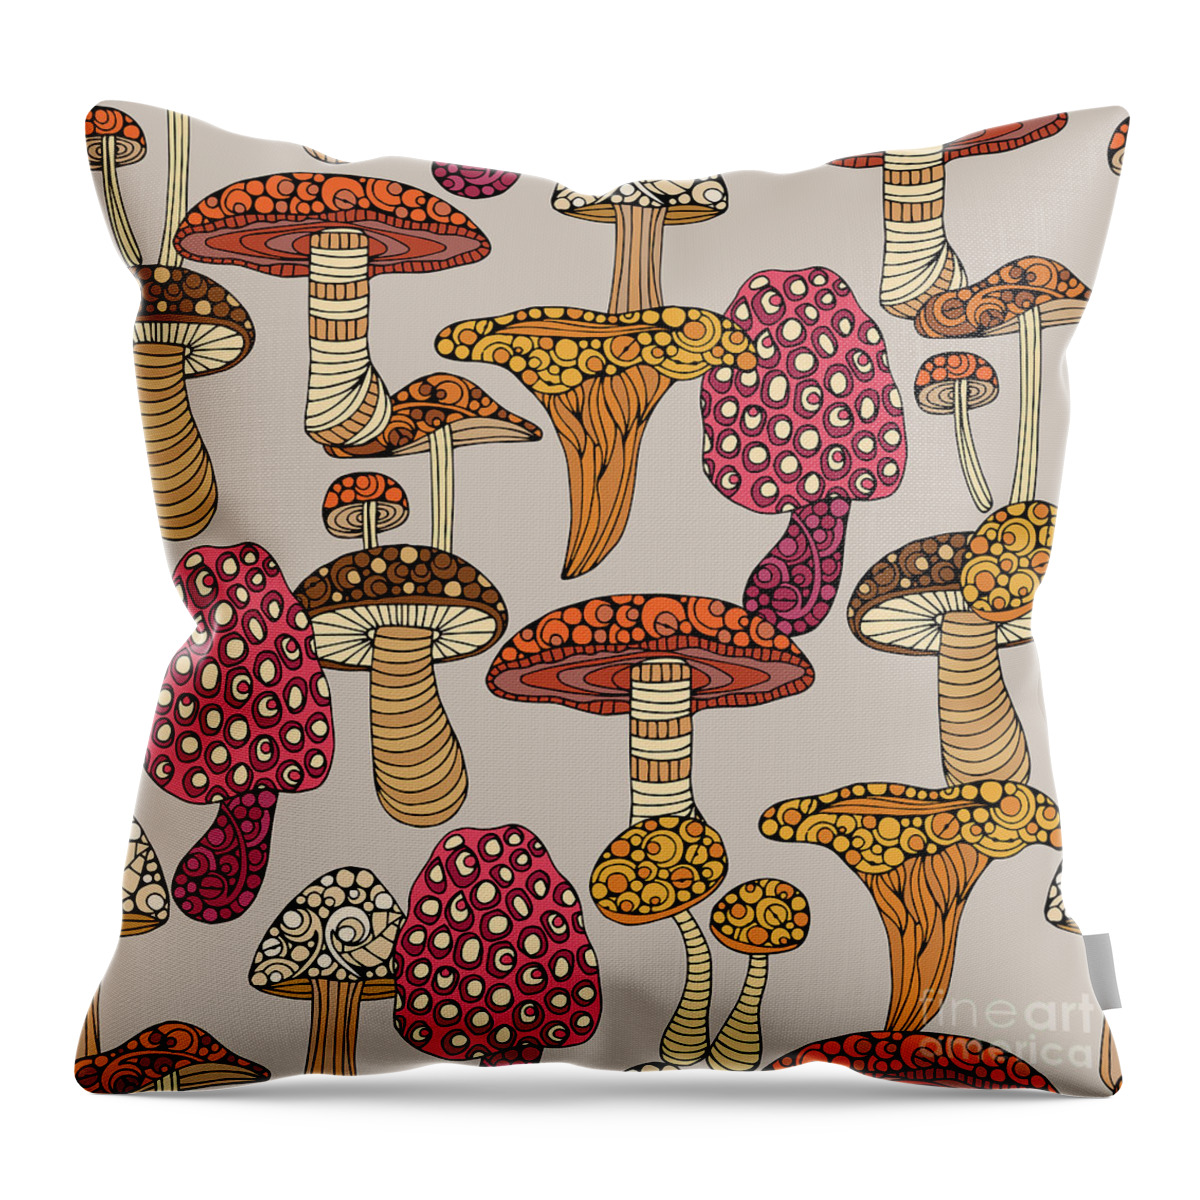 Mushroom Throw Pillow featuring the digital art Mushroom Pattern by MGL Meiklejohn Graphics Licensing